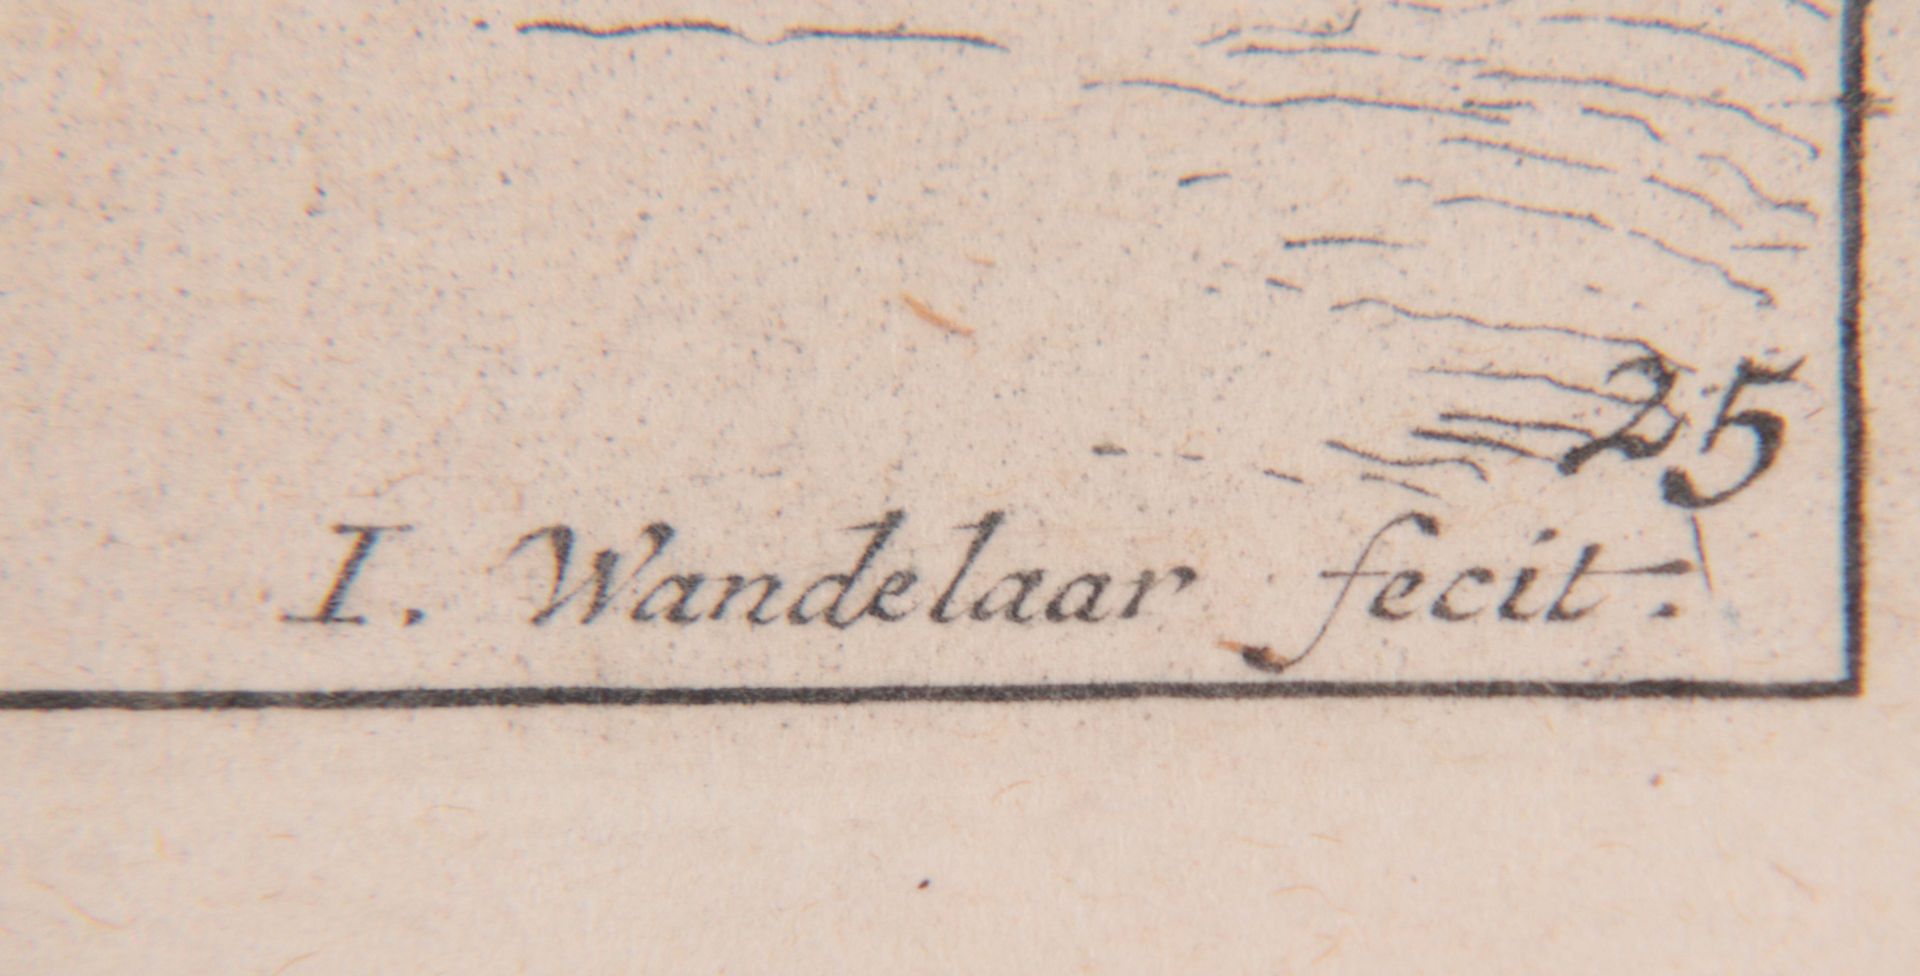 Wandelaar, Jan Zwei Kupferstiche von Jan Wandelaar (1690 Amsterdam - 1759 Leiden, nied - Image 8 of 13